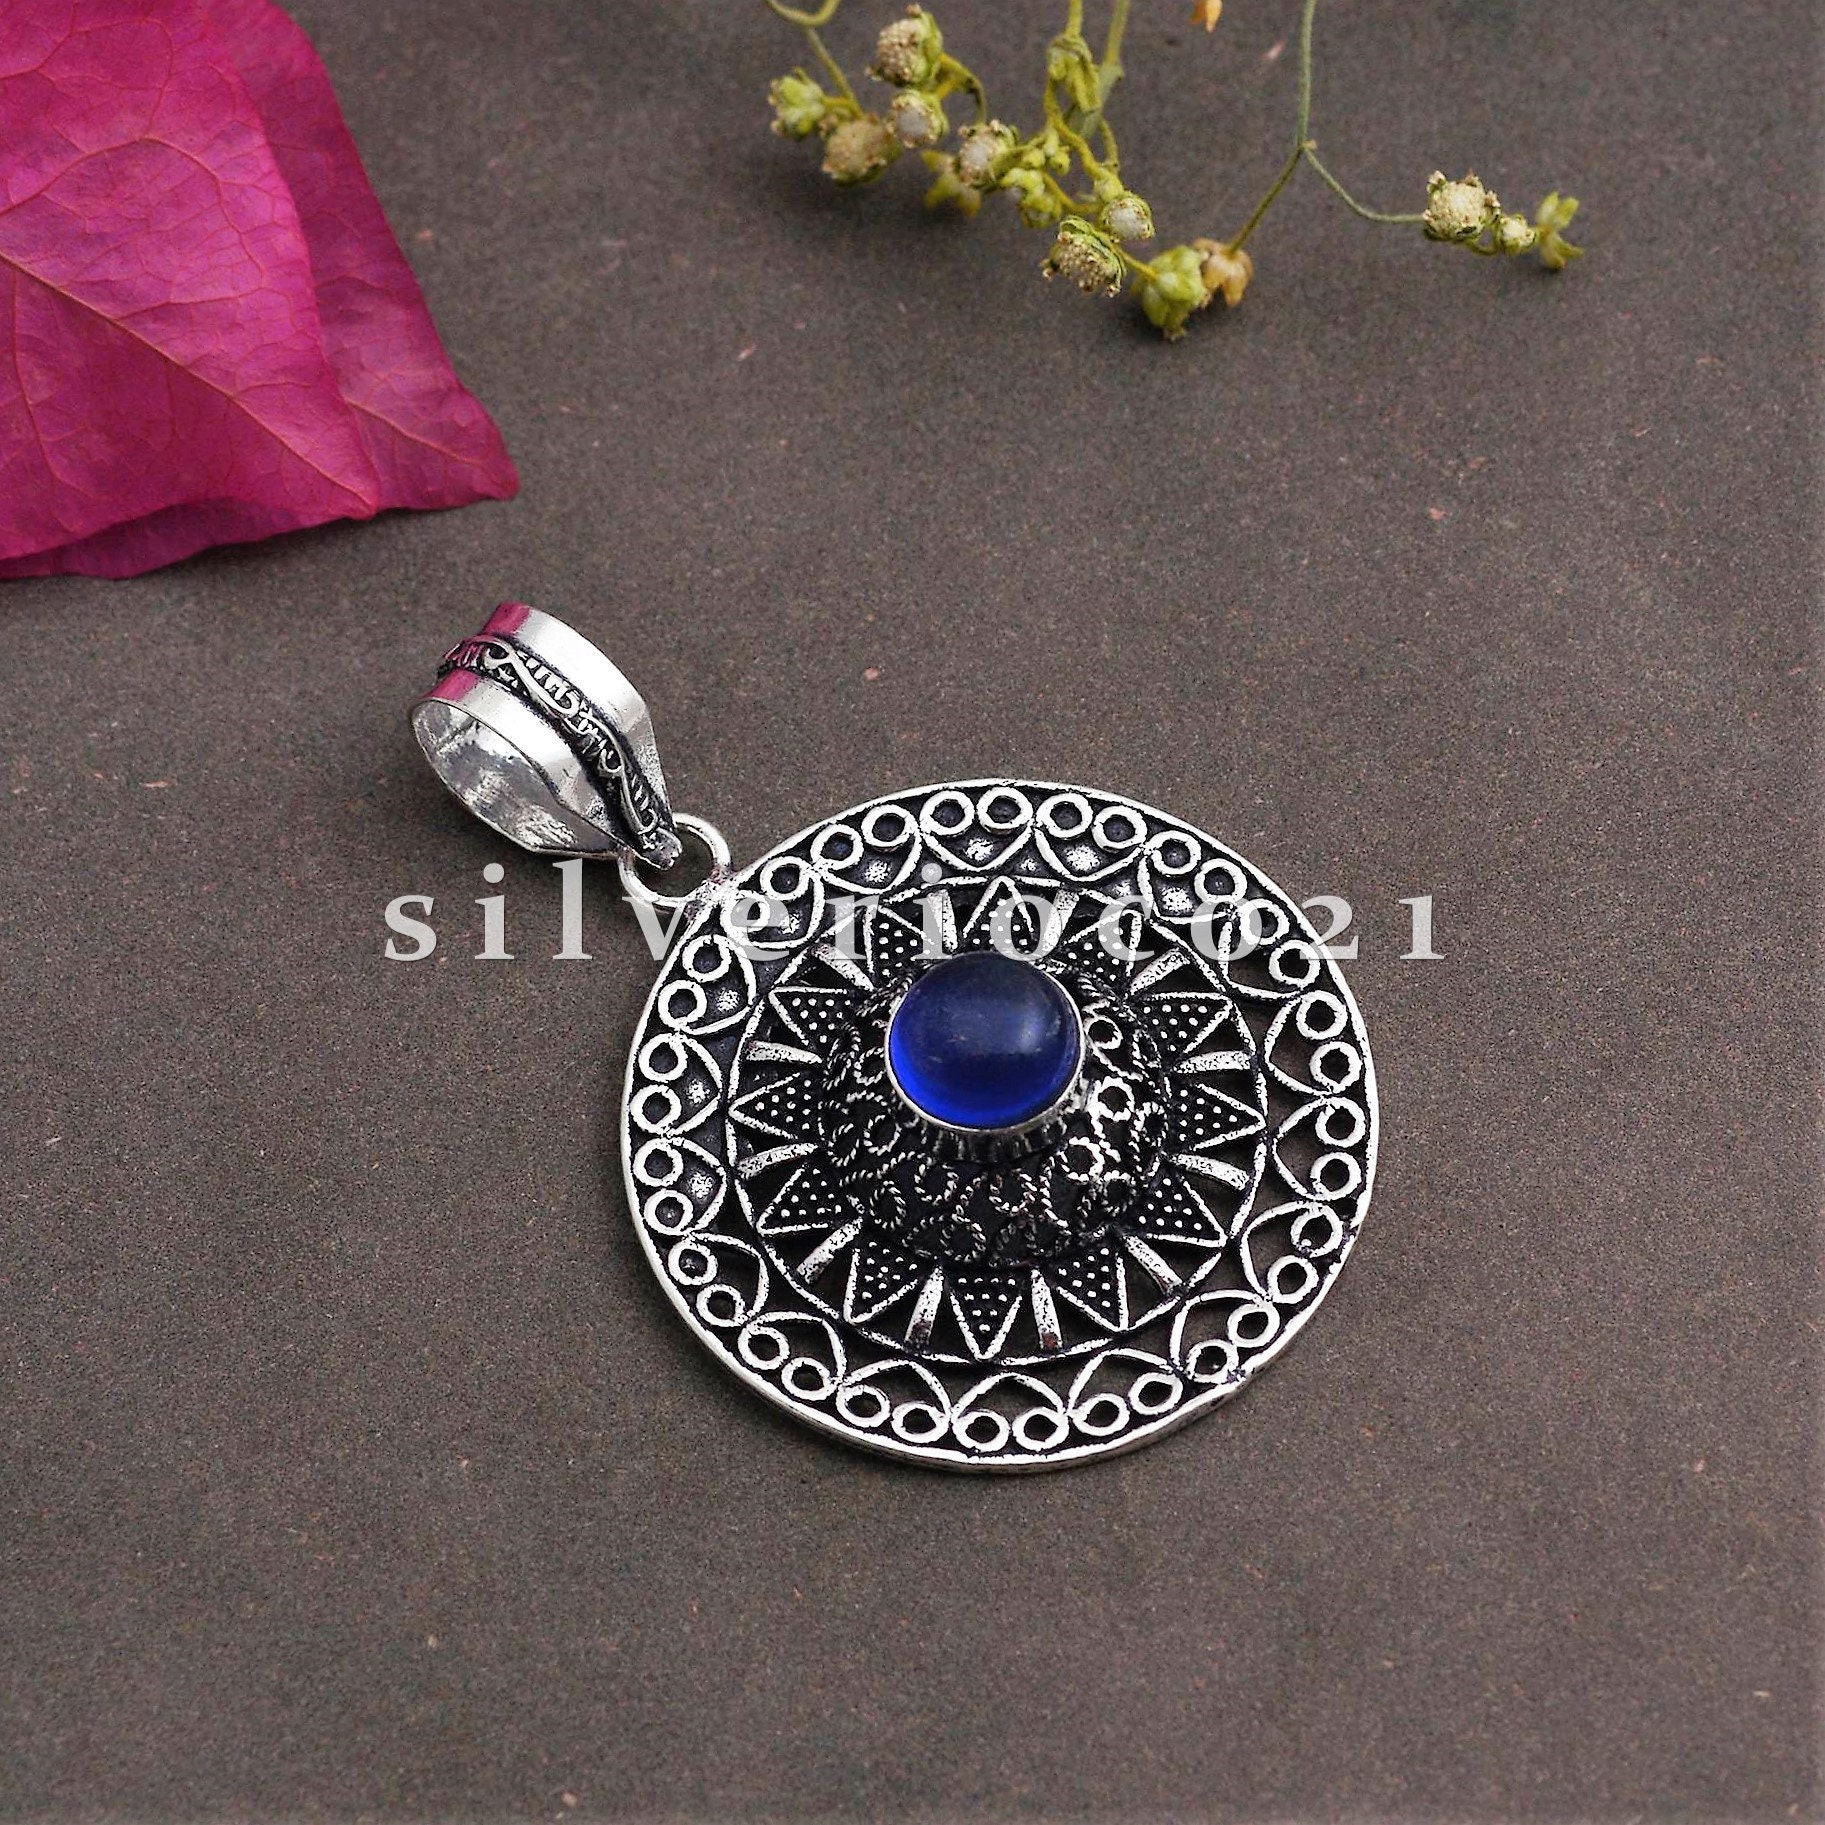 Most Sale Pendants Chakra Design Pendant Gemstone Pendant For Women Trending Blue Sapphire Gemstone 925 Silver Plated Pendant Jewelry